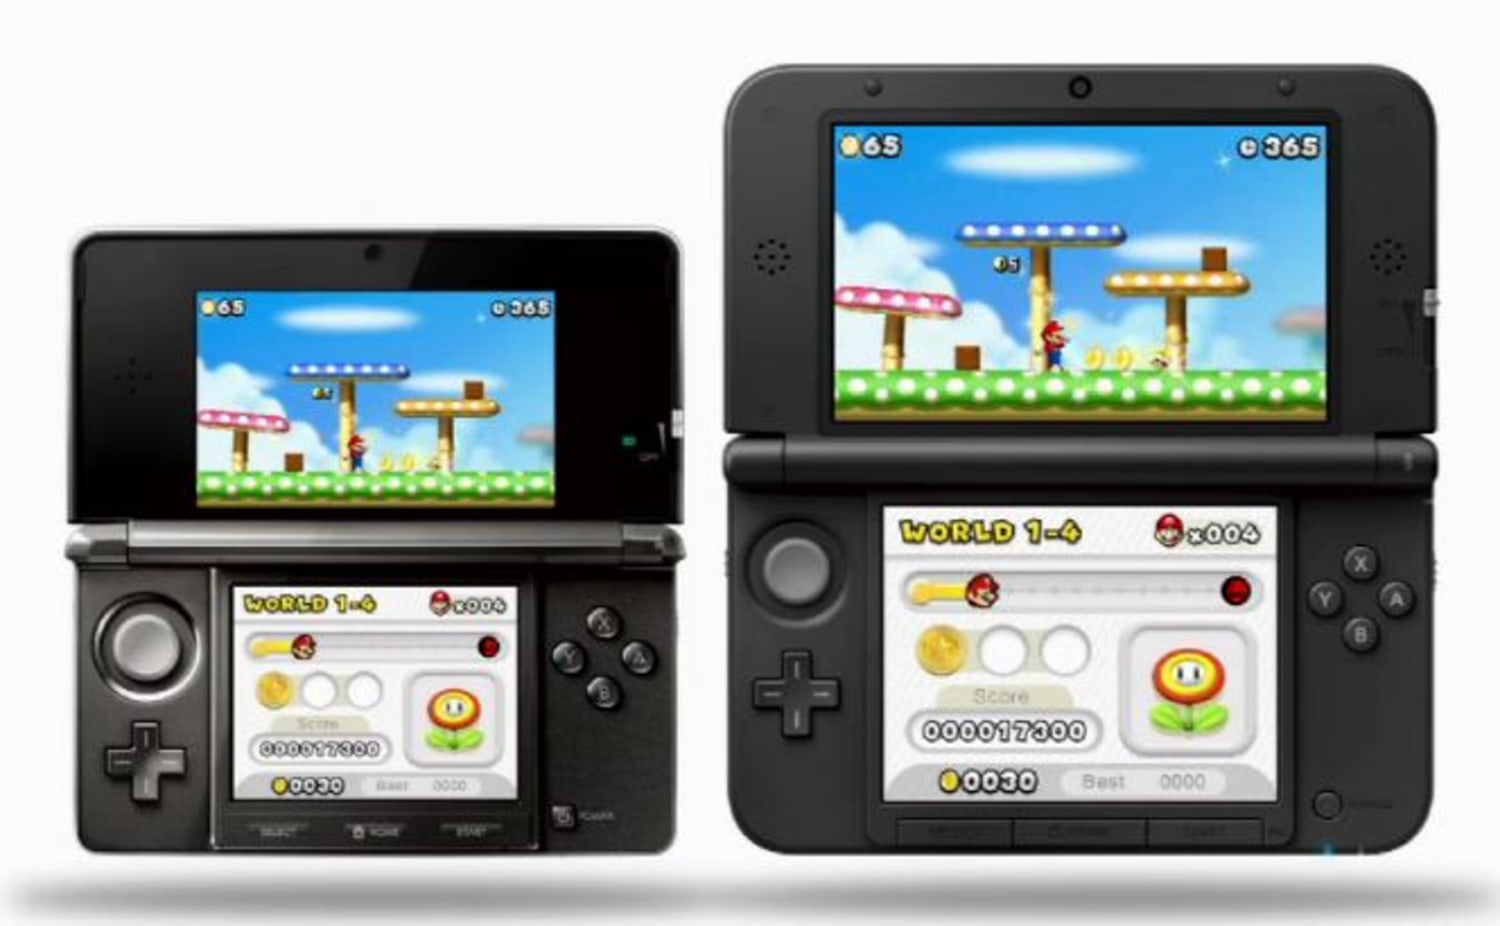 Mekaniker Årvågenhed evne Nintendo unveils super-sized 3DS XL game machine